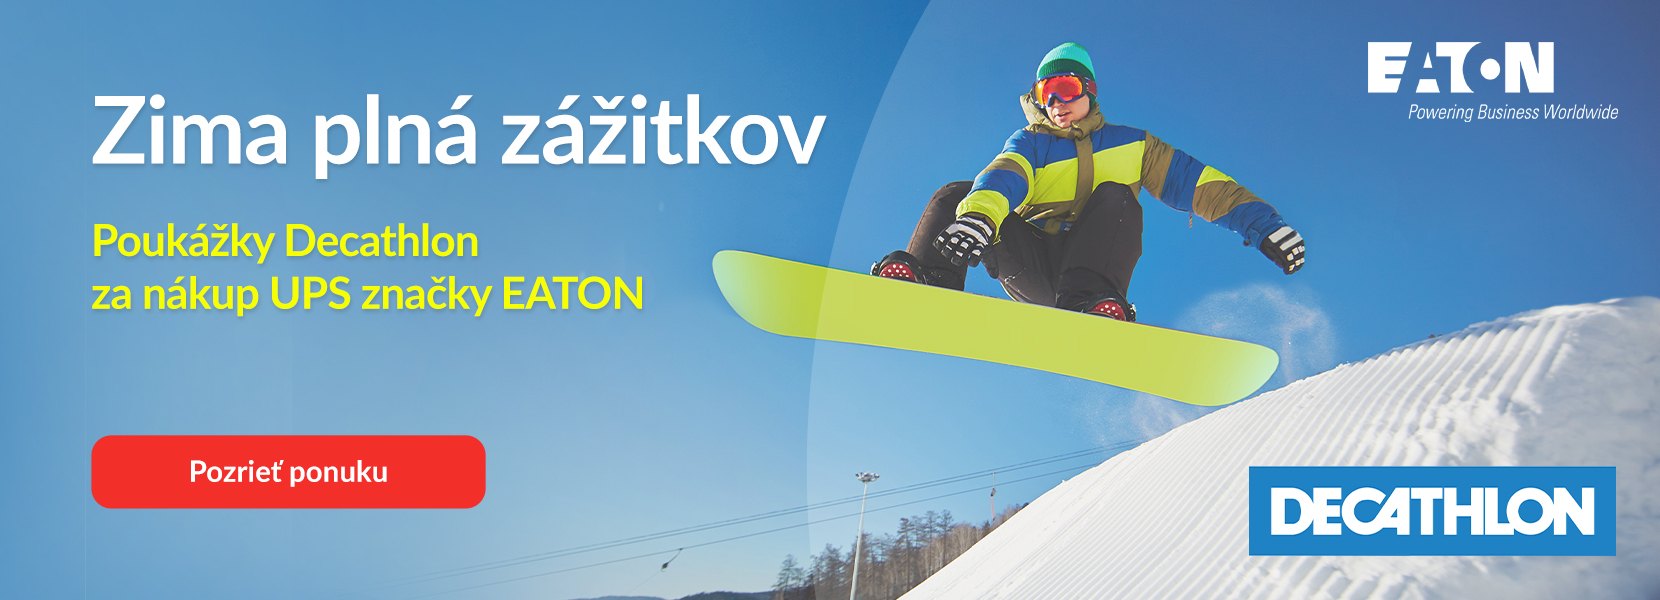 EATON - Decathlon - Zima plná zážitkov